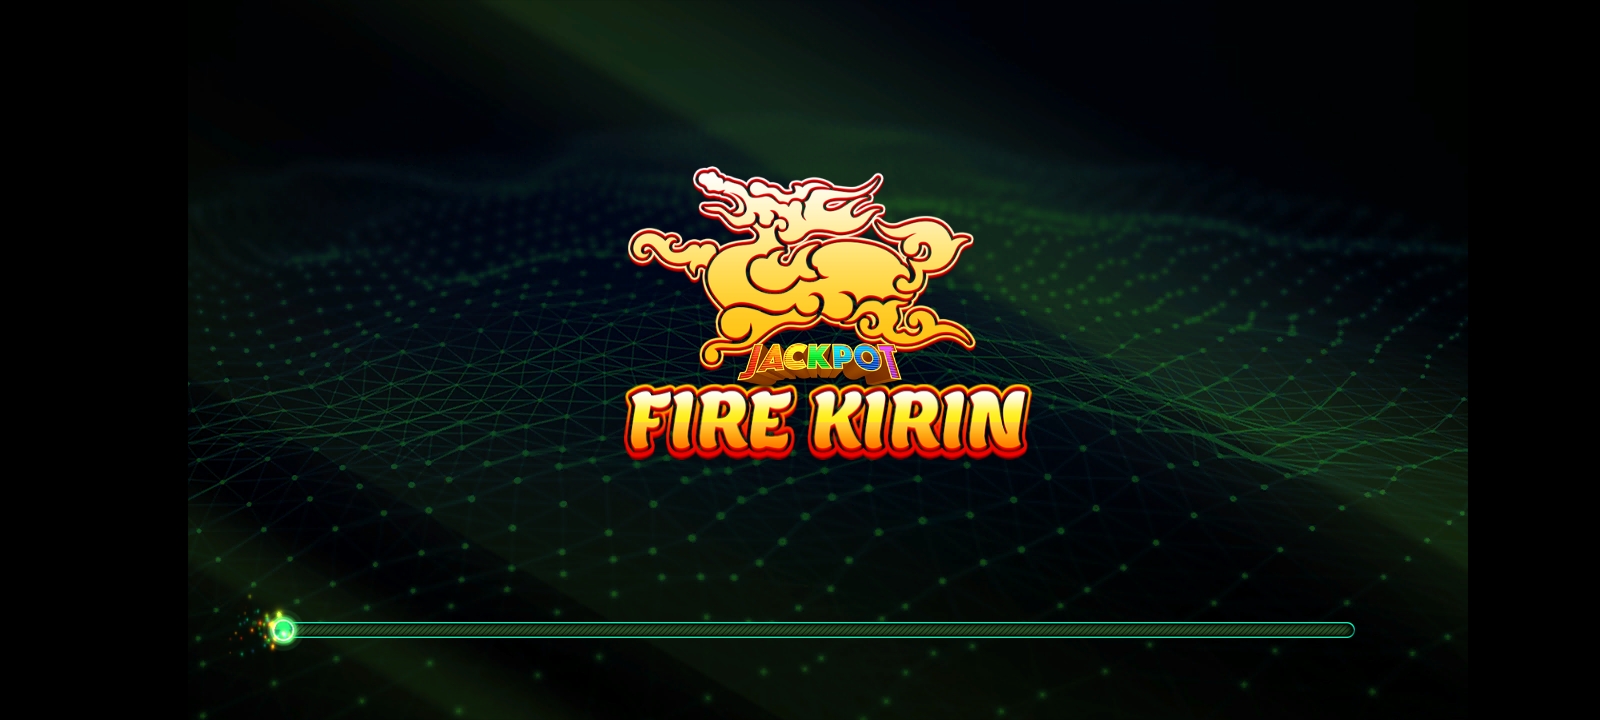 fire kirin free play download